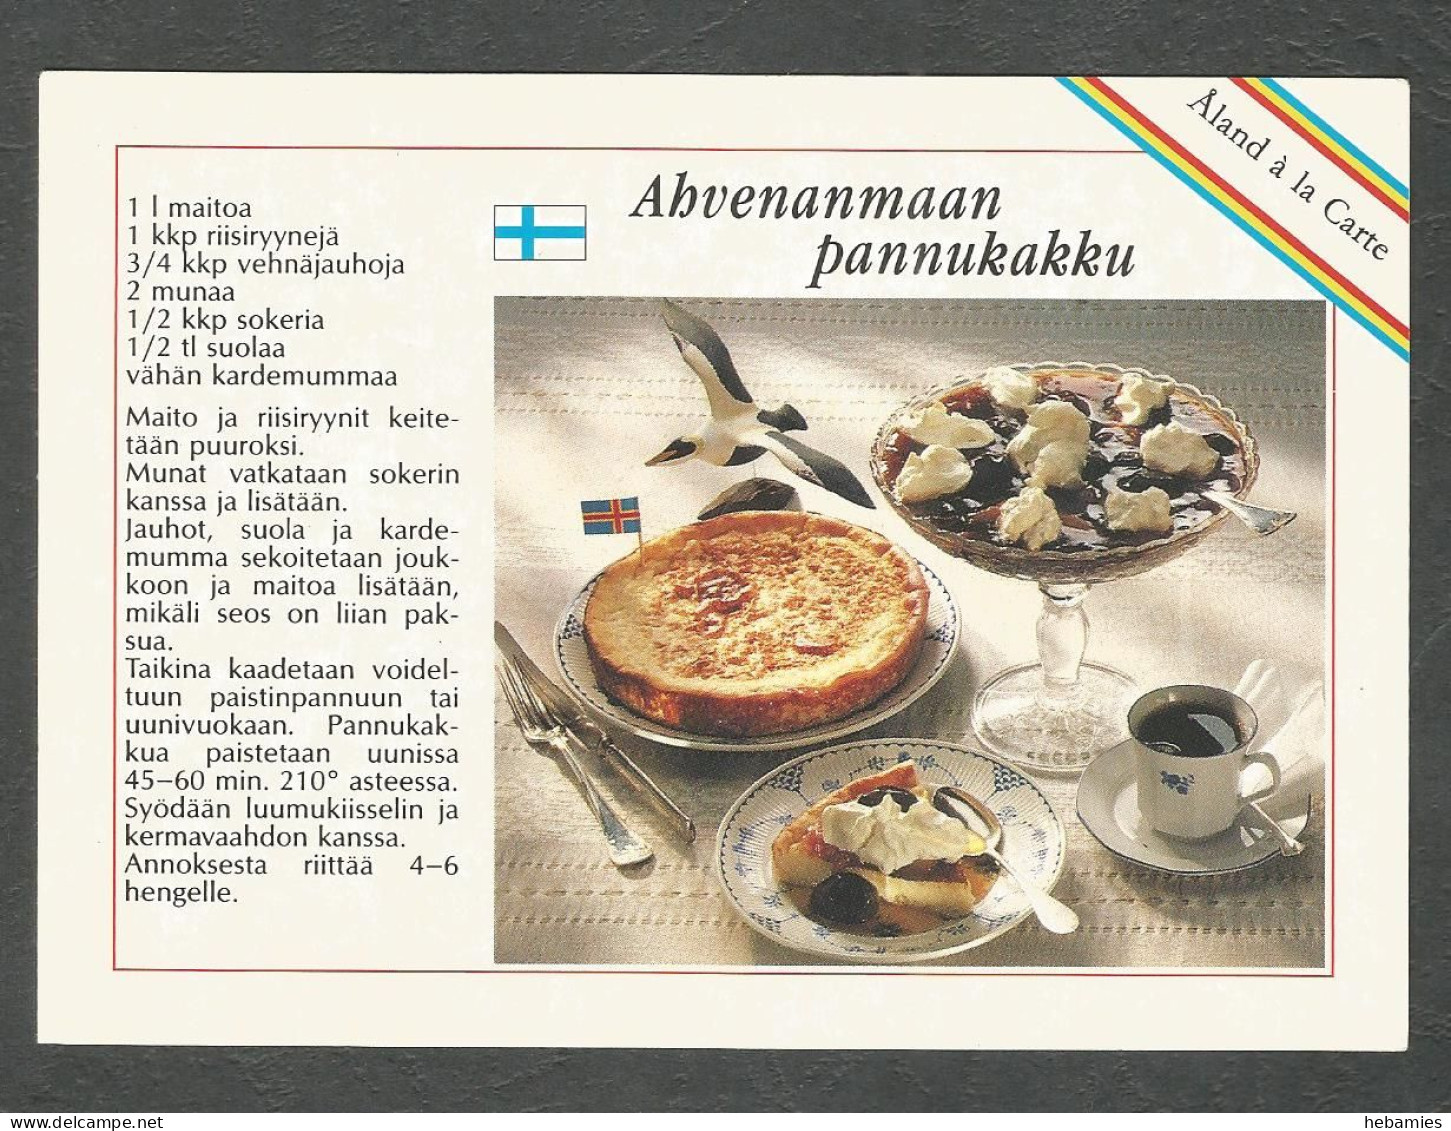 ÅLAND á La Carte Traditional PANCAKE RECIPE - FINLAND - - Finnland